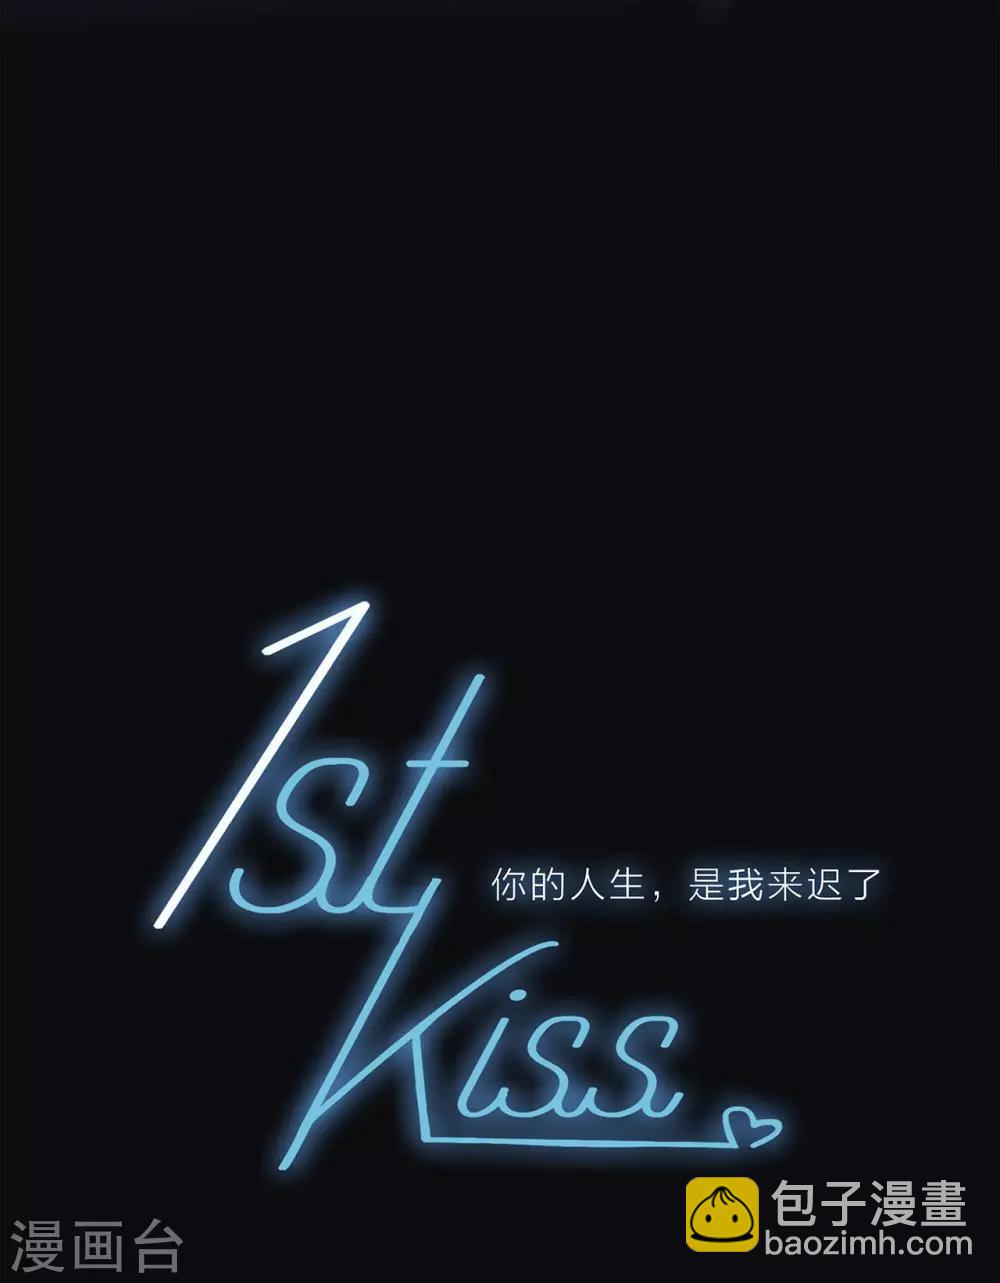 1st Kiss - 第19话：叔叔的真相 - 1